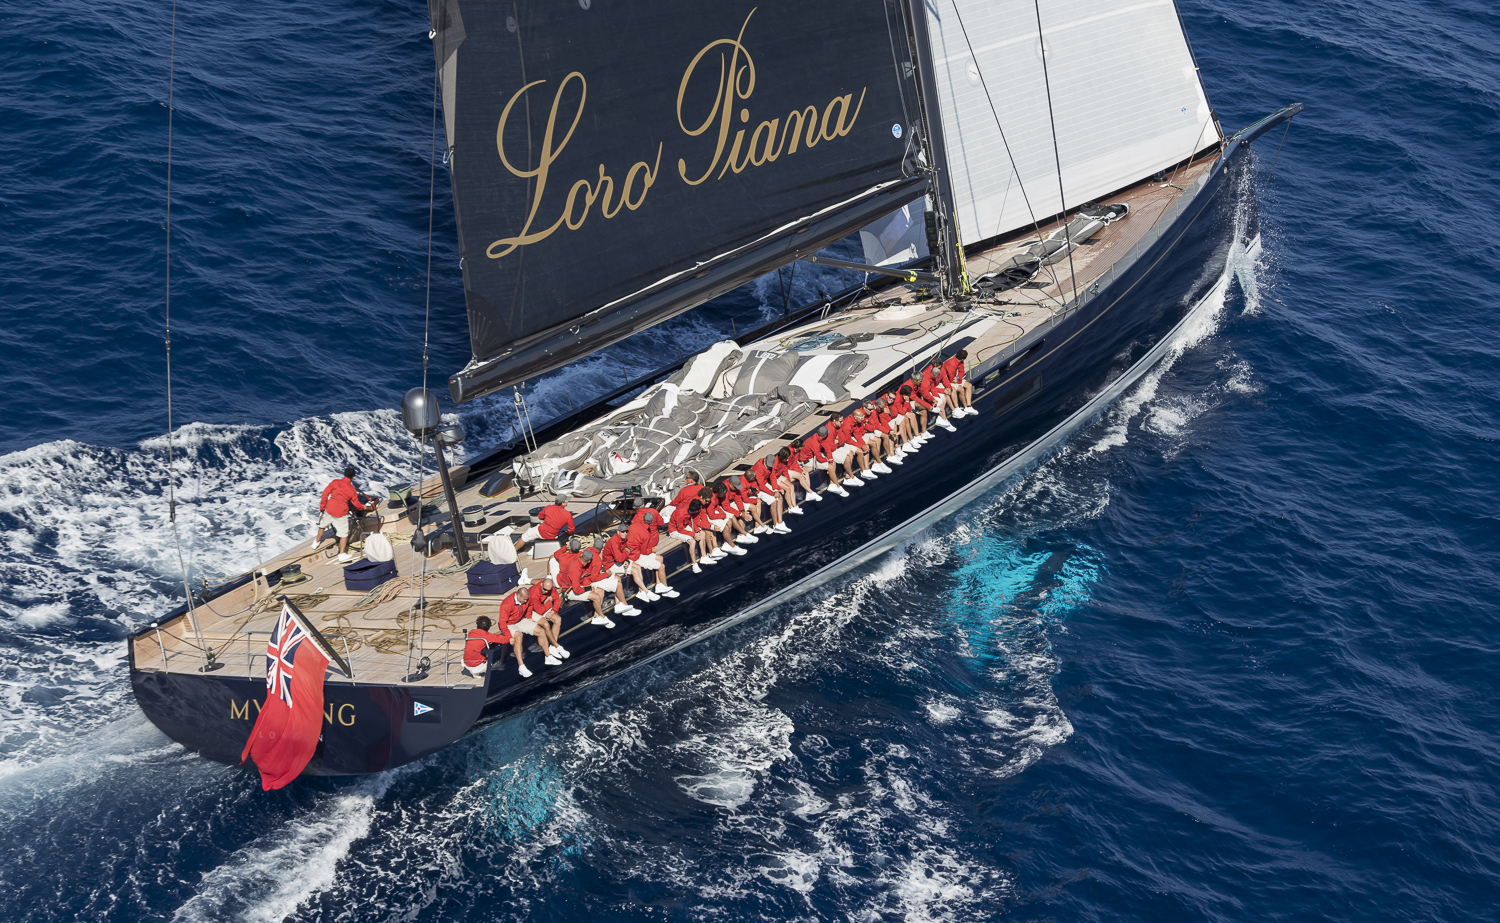 Yacht Club Costa Smeralda Welcomes the 2017 Loro Piana Superyacht Regatta - News - Yacht Club Costa Smeralda